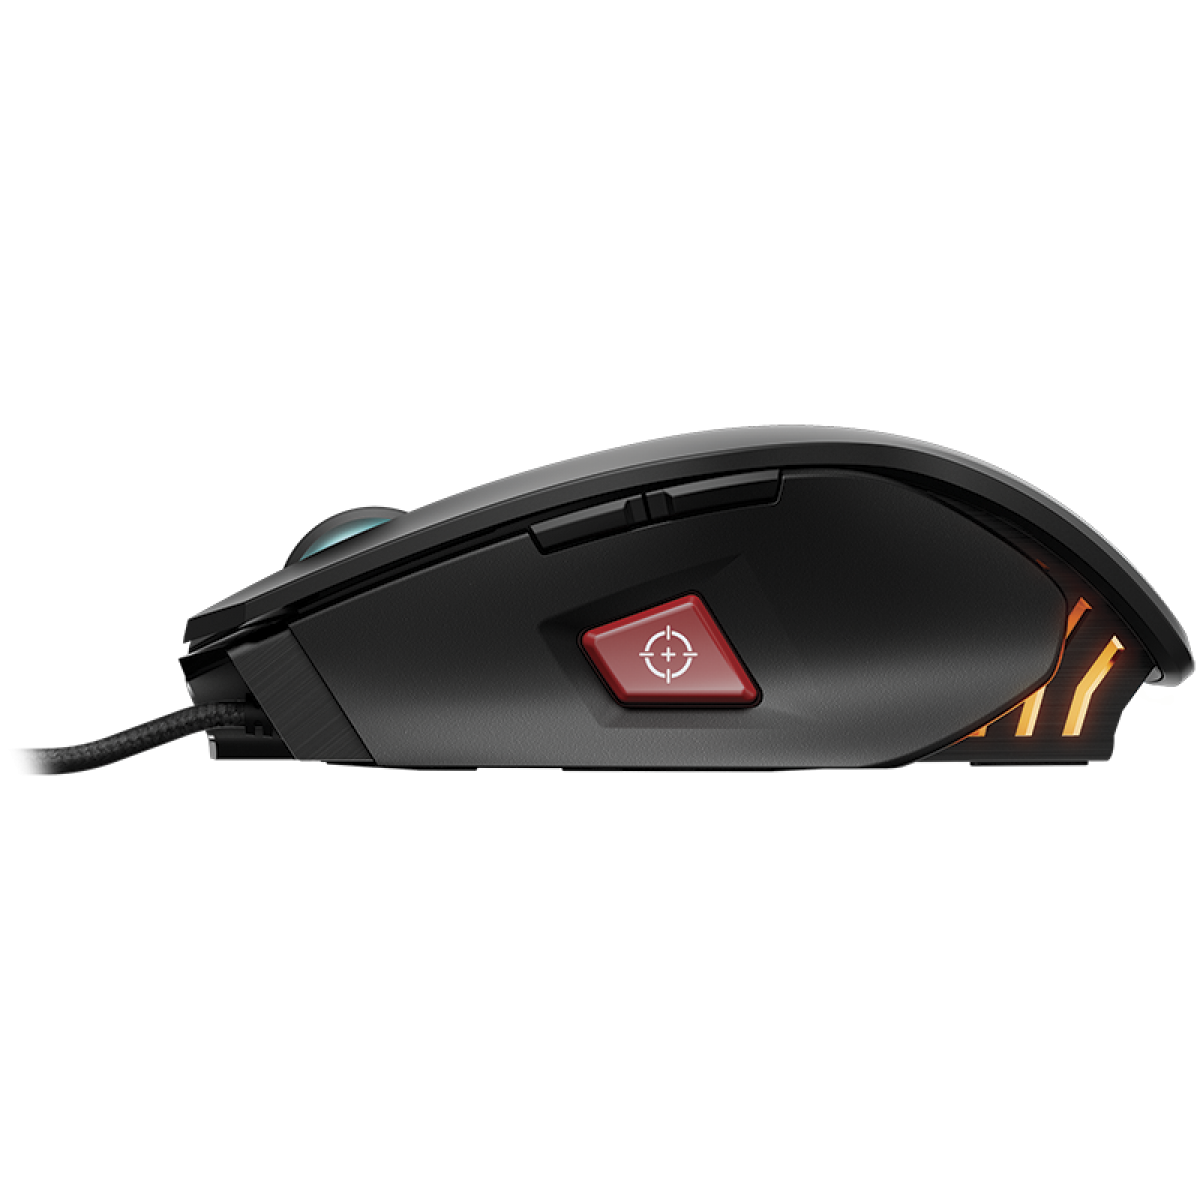 Mouse Corsair Gaming M65 Laser RGB CH-9000070-NA 8 Botões 8200 DPI Black